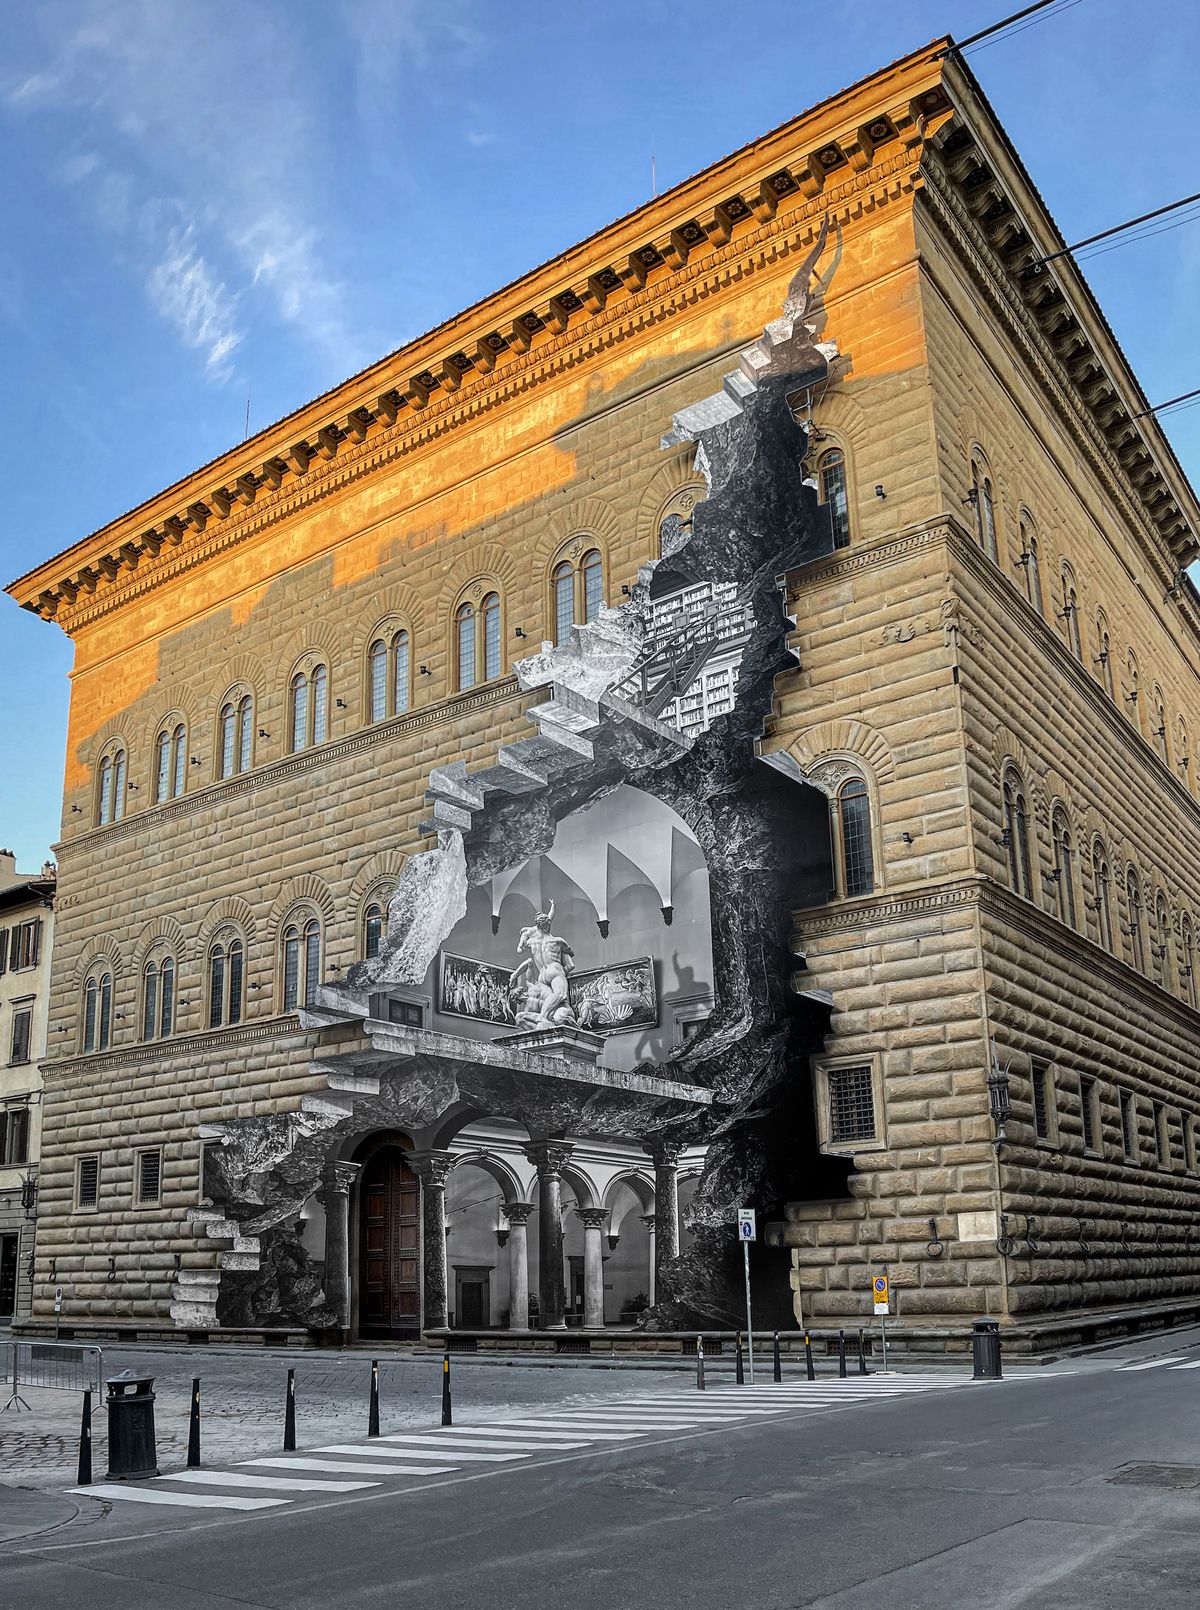 JR's La Ferita (the wound) at the Palazzo Strozzi in Florence Photo: JR